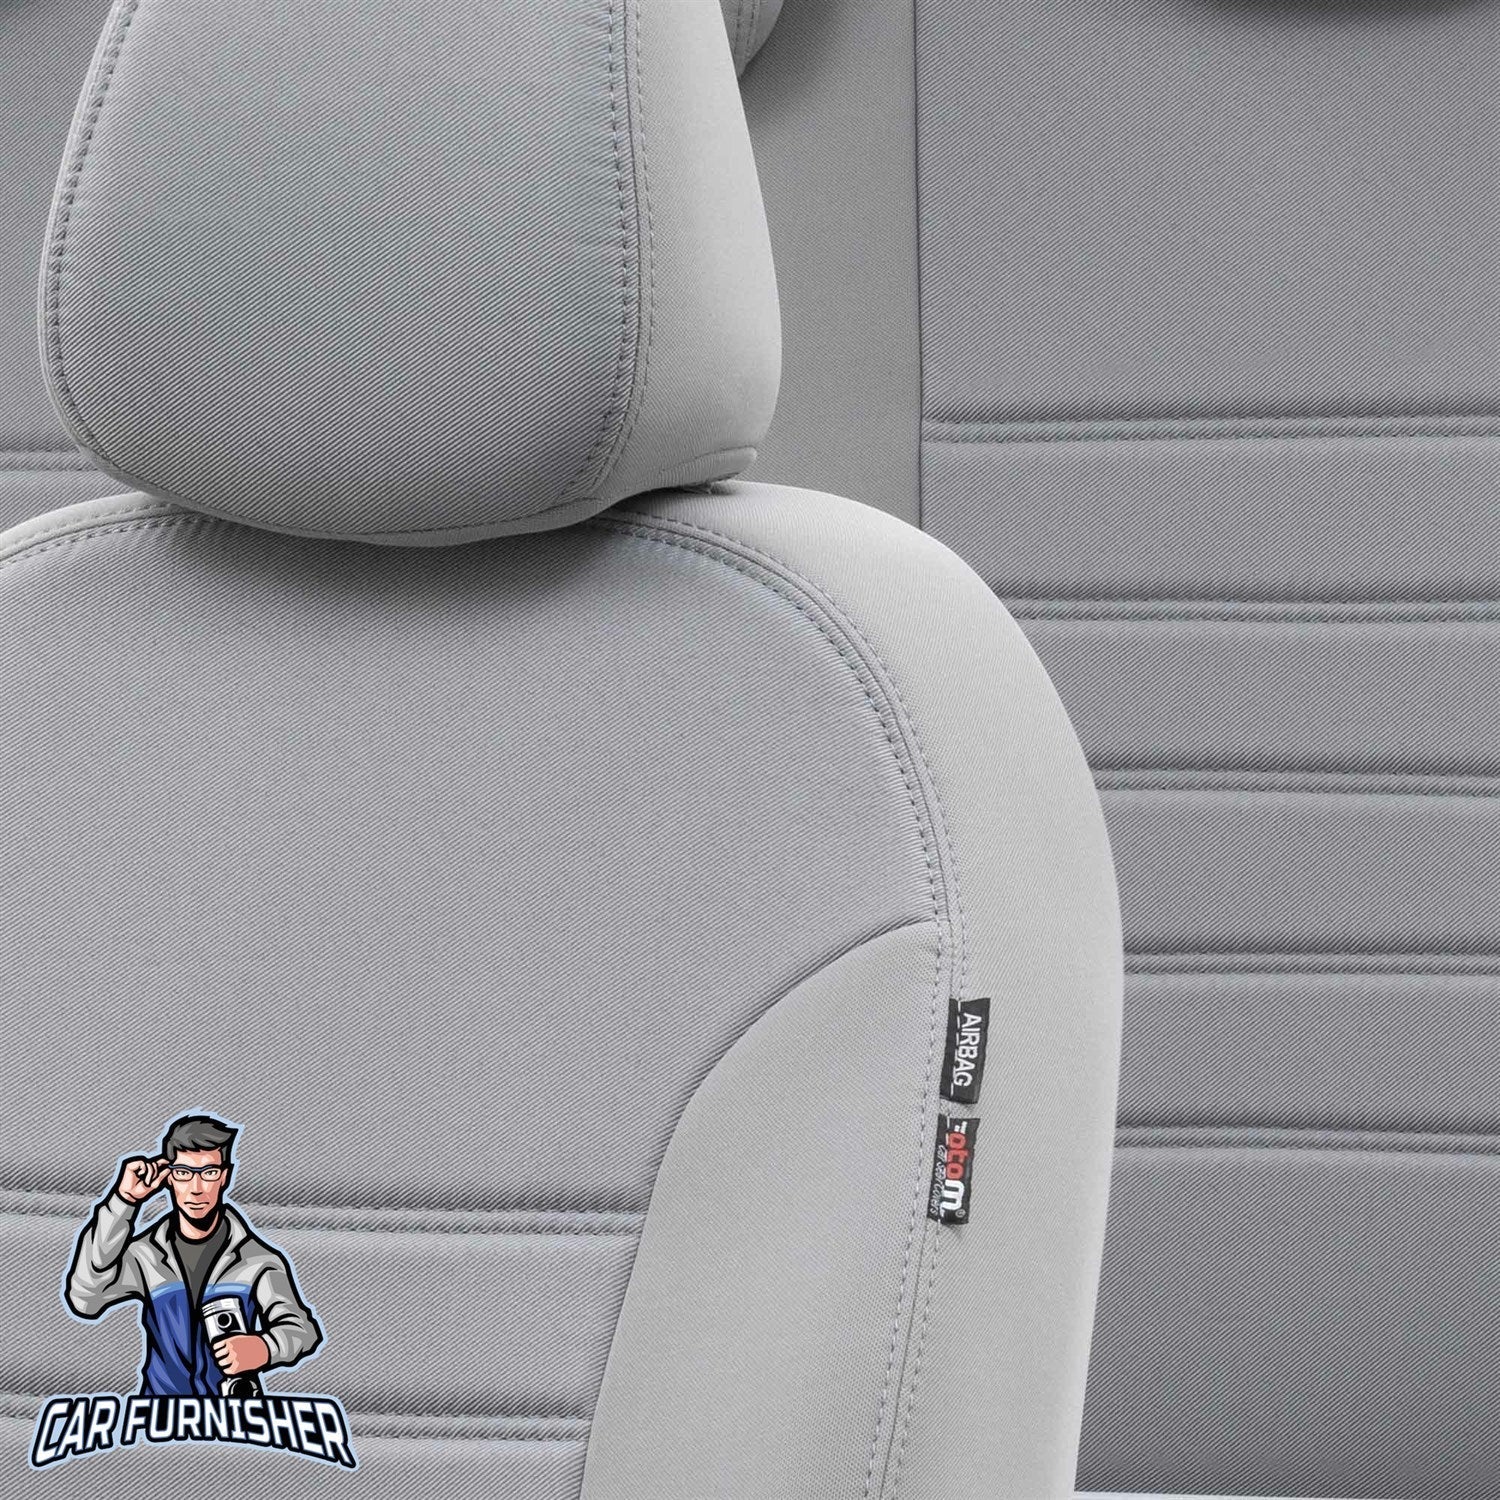 Honda HRV Seat Covers Original Jacquard Design Light Gray Jacquard Fabric